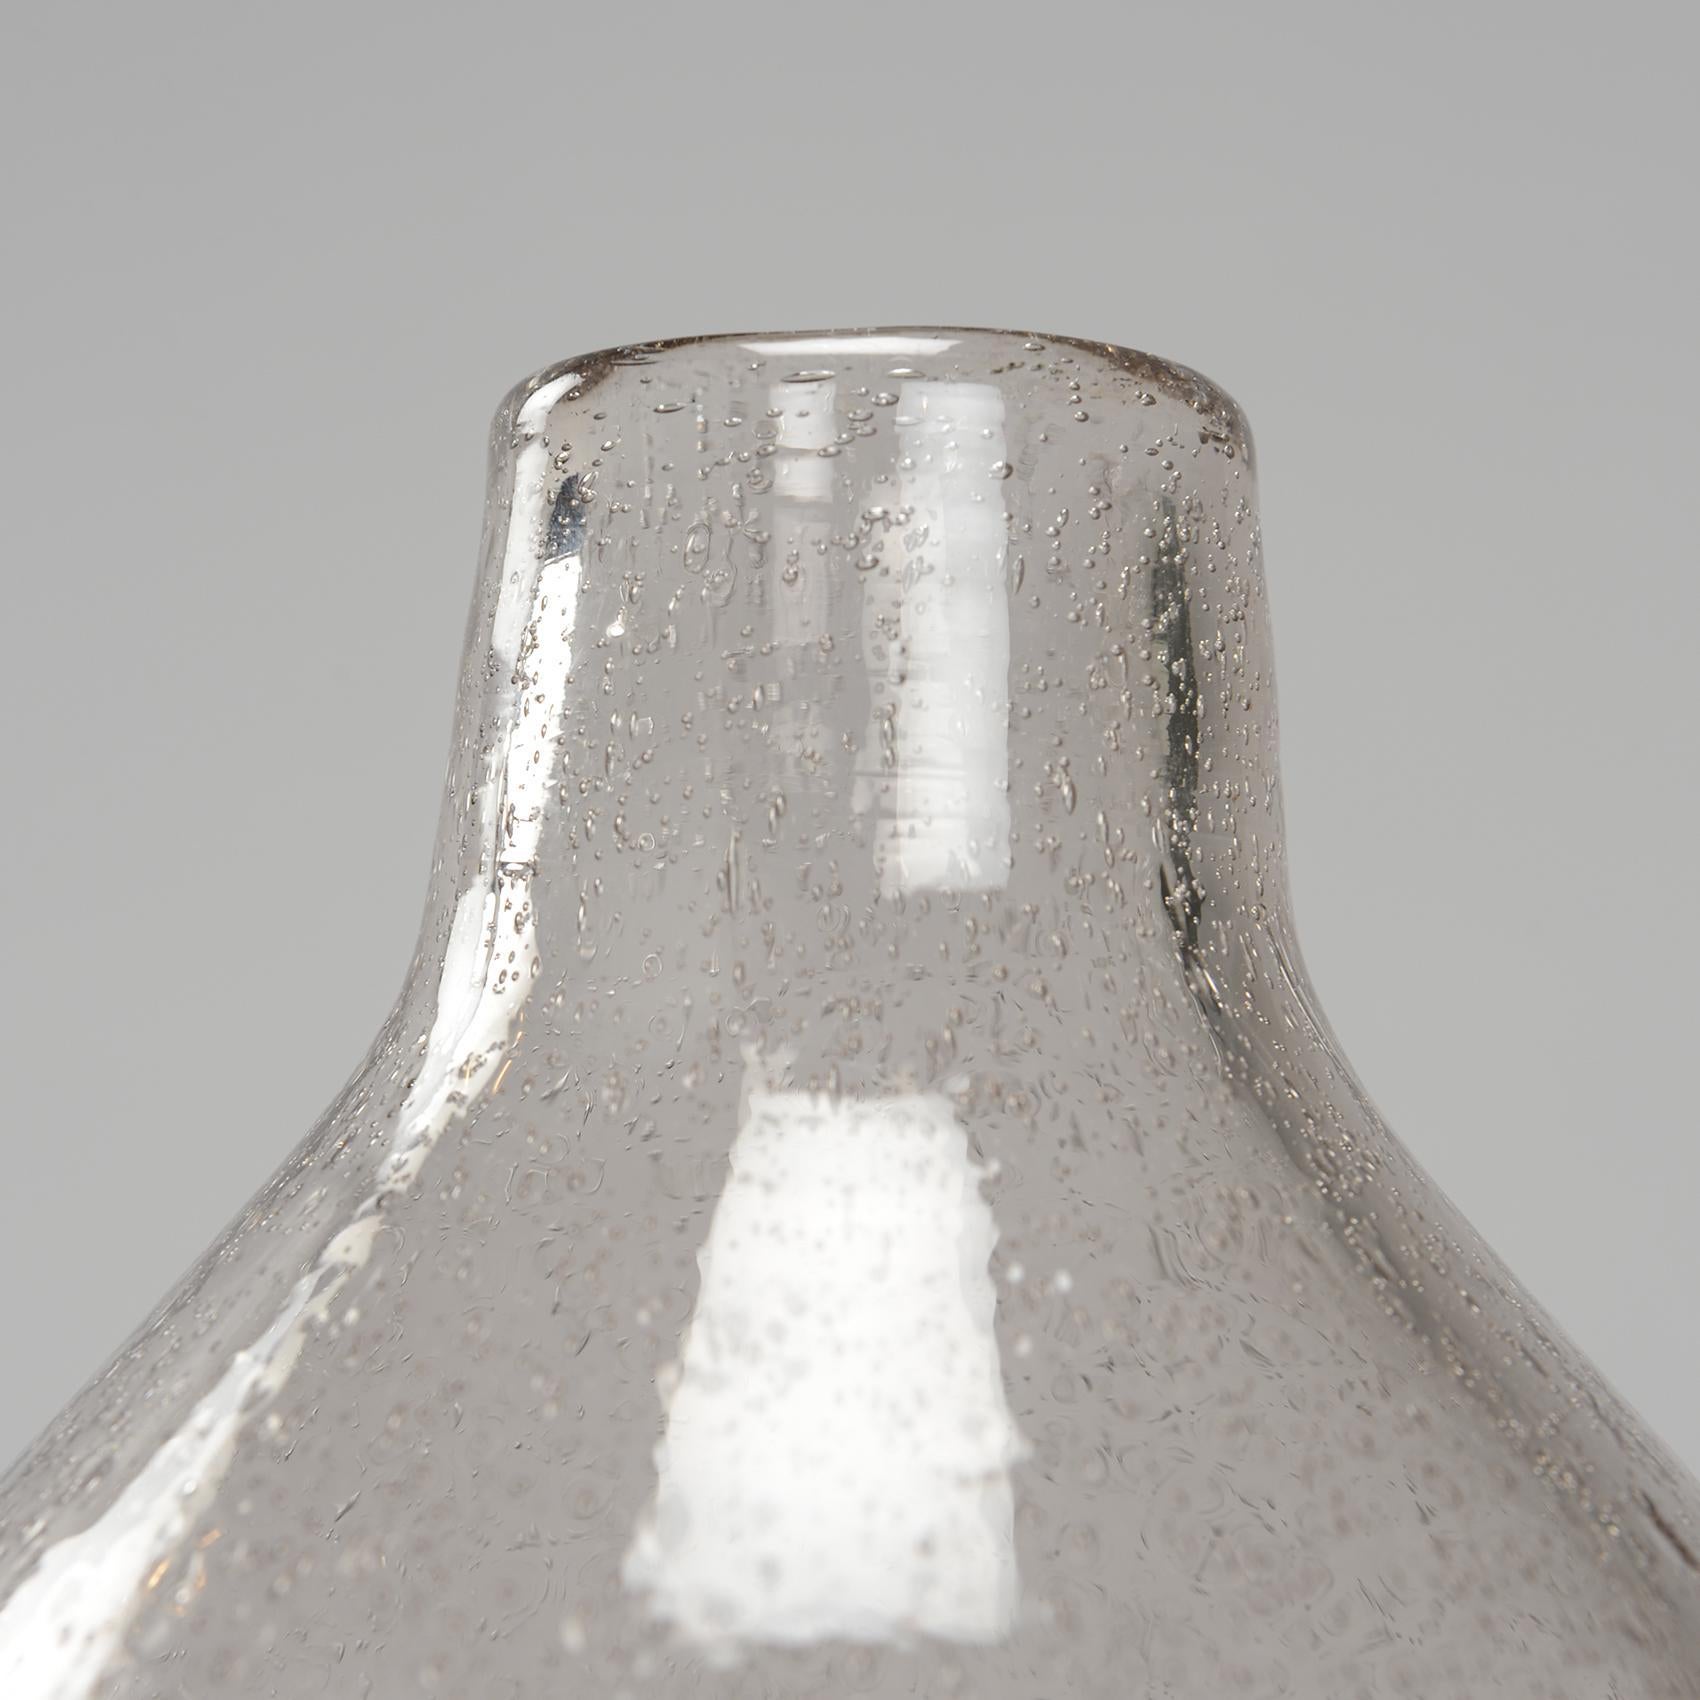 French Alexandre Kostanda Blown Glass Vases, Vallauris, France For Sale